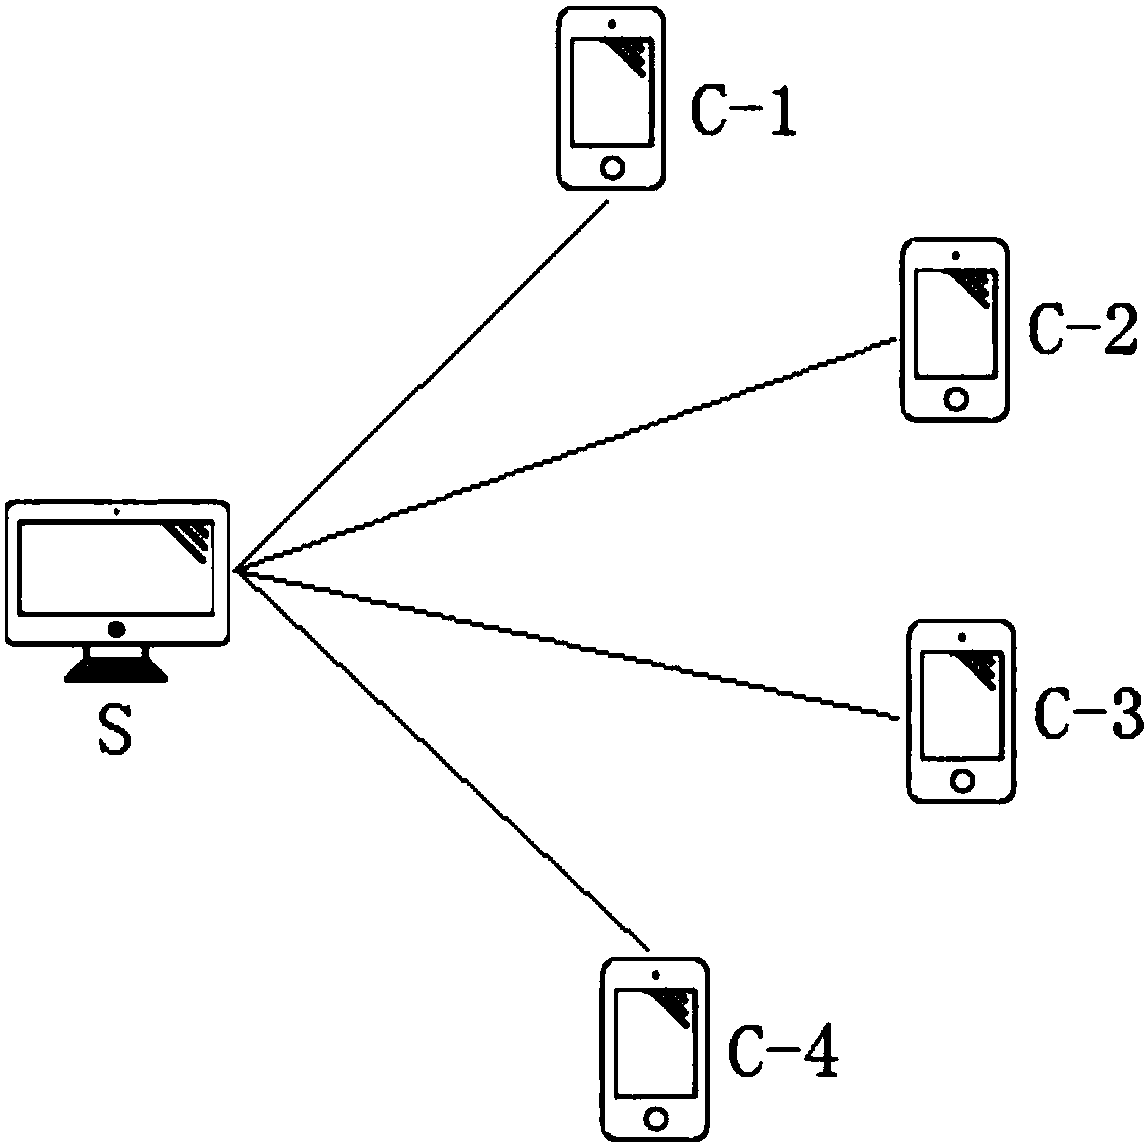 Ad hoc network node signal strength analysis method